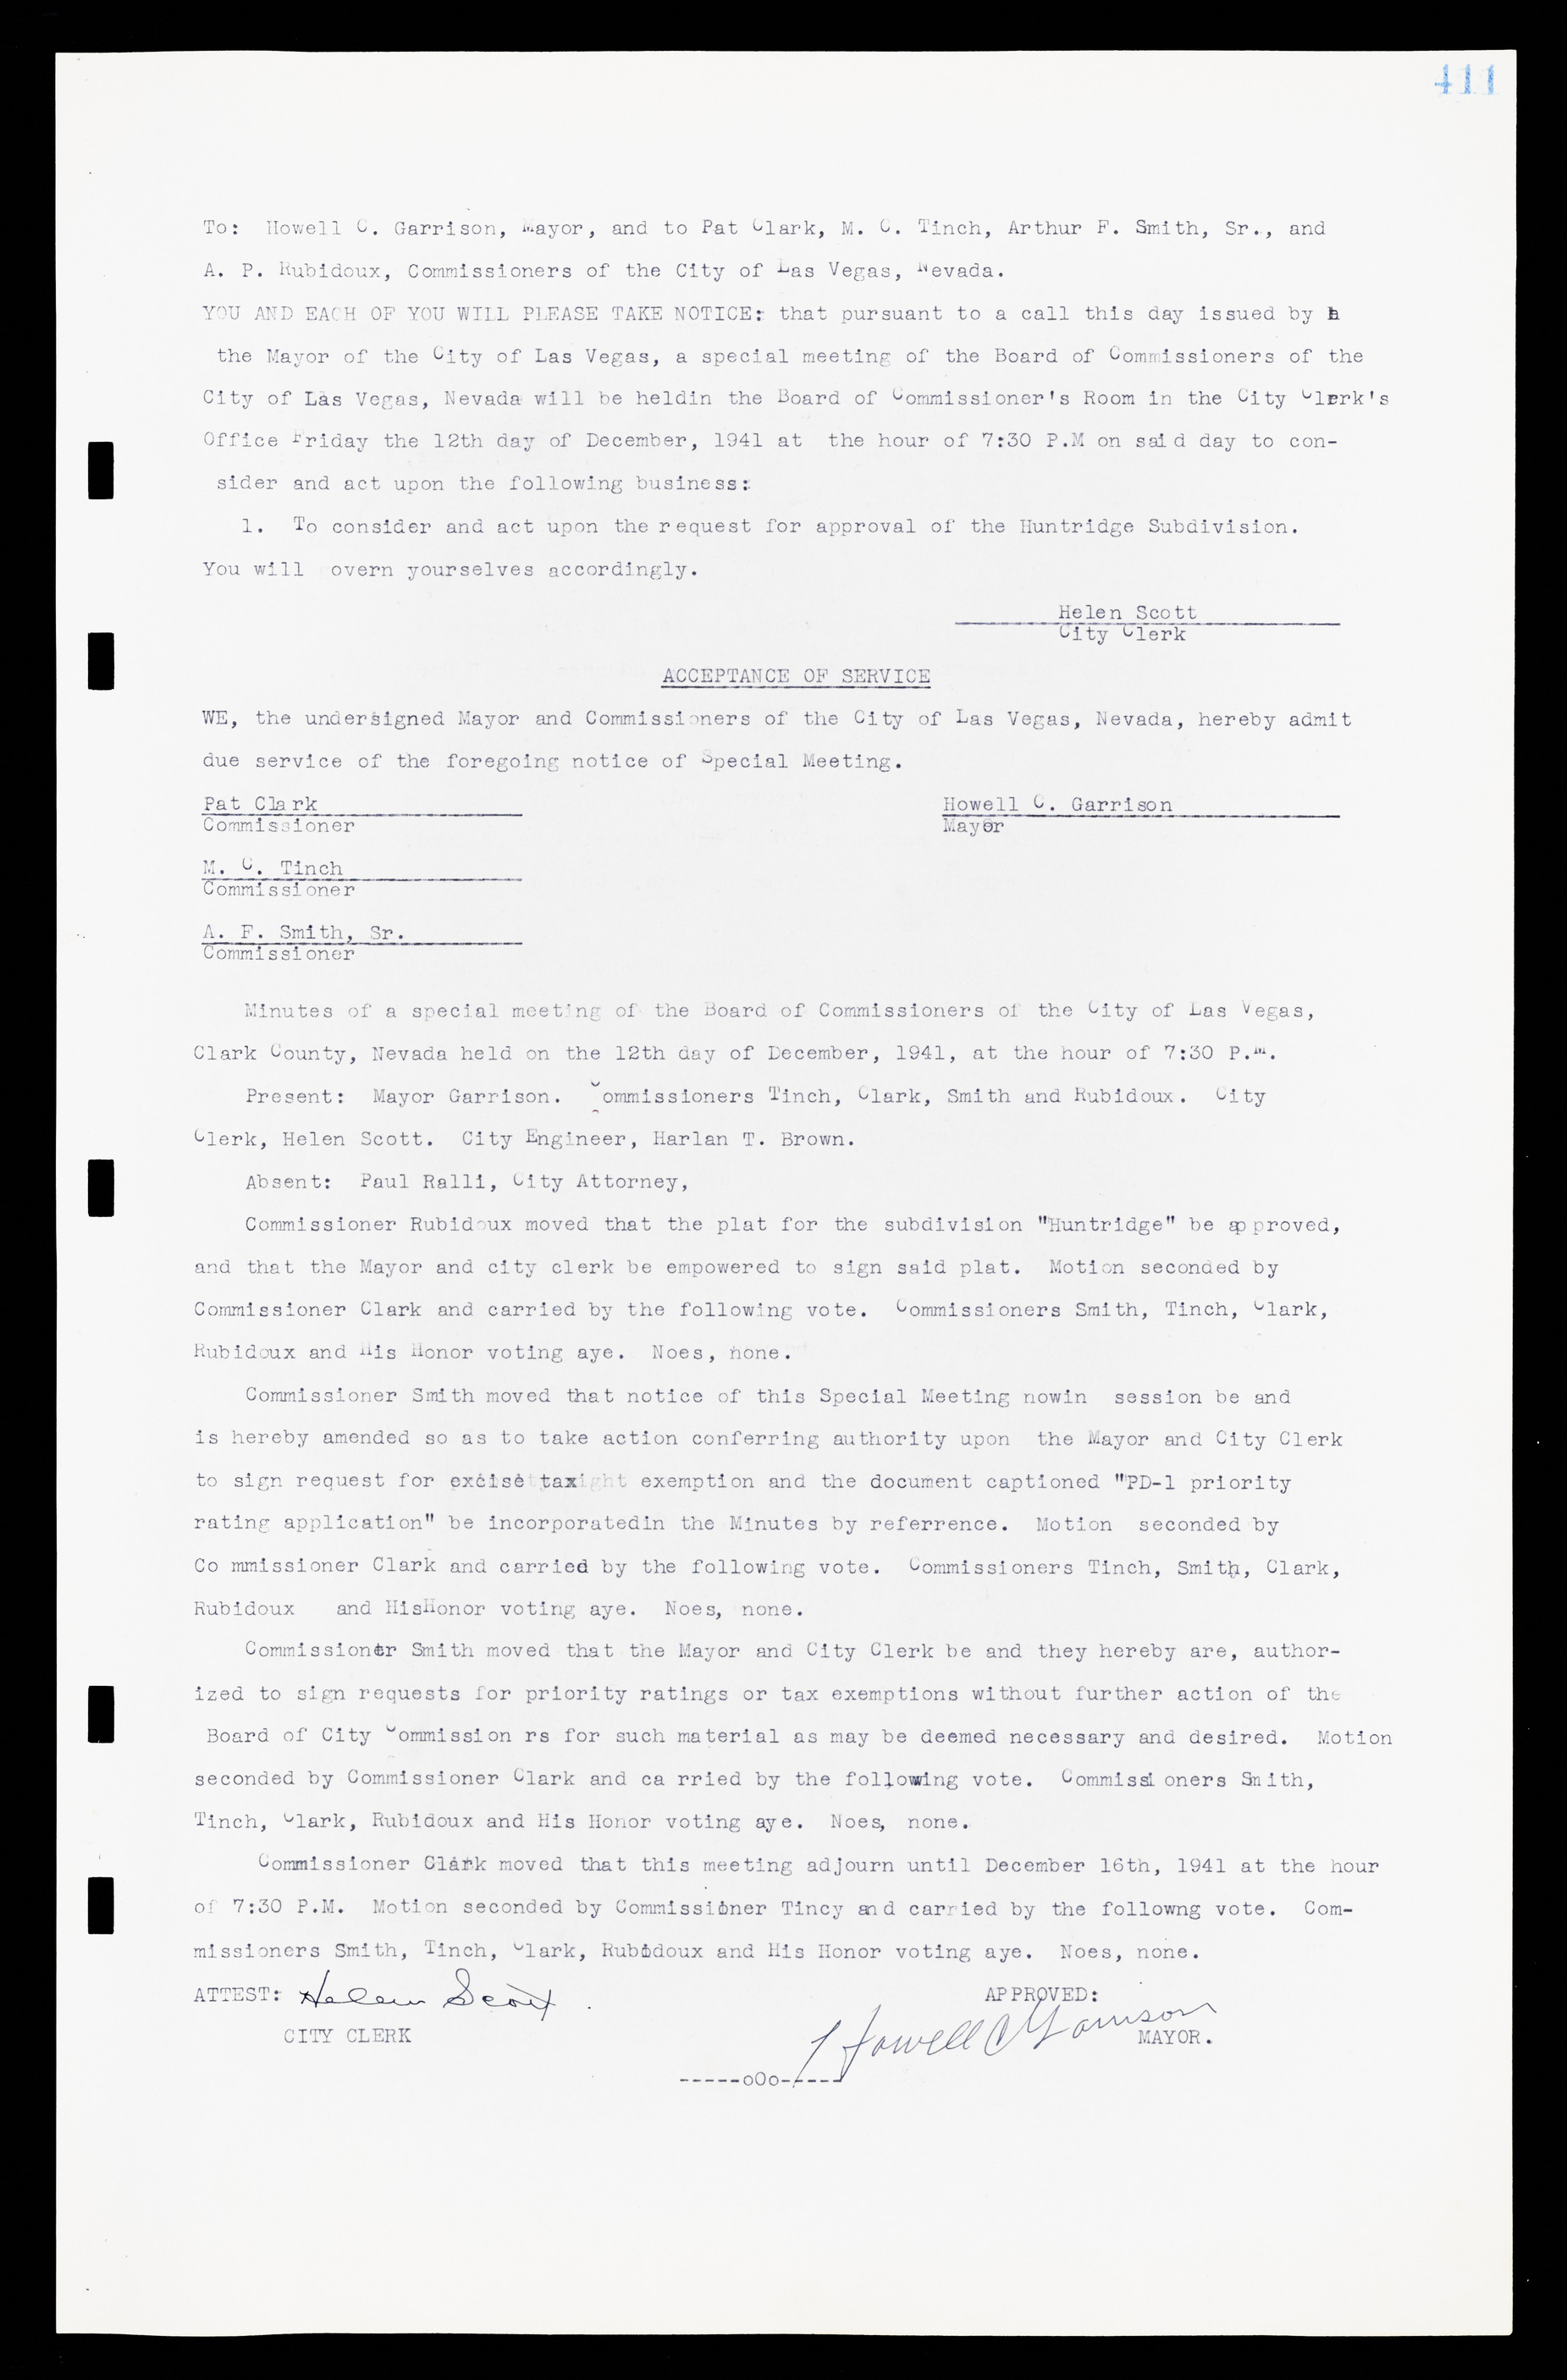 Las Vegas City Commission Minutes, February 17, 1937 to August 4, 1942, lvc000004-437